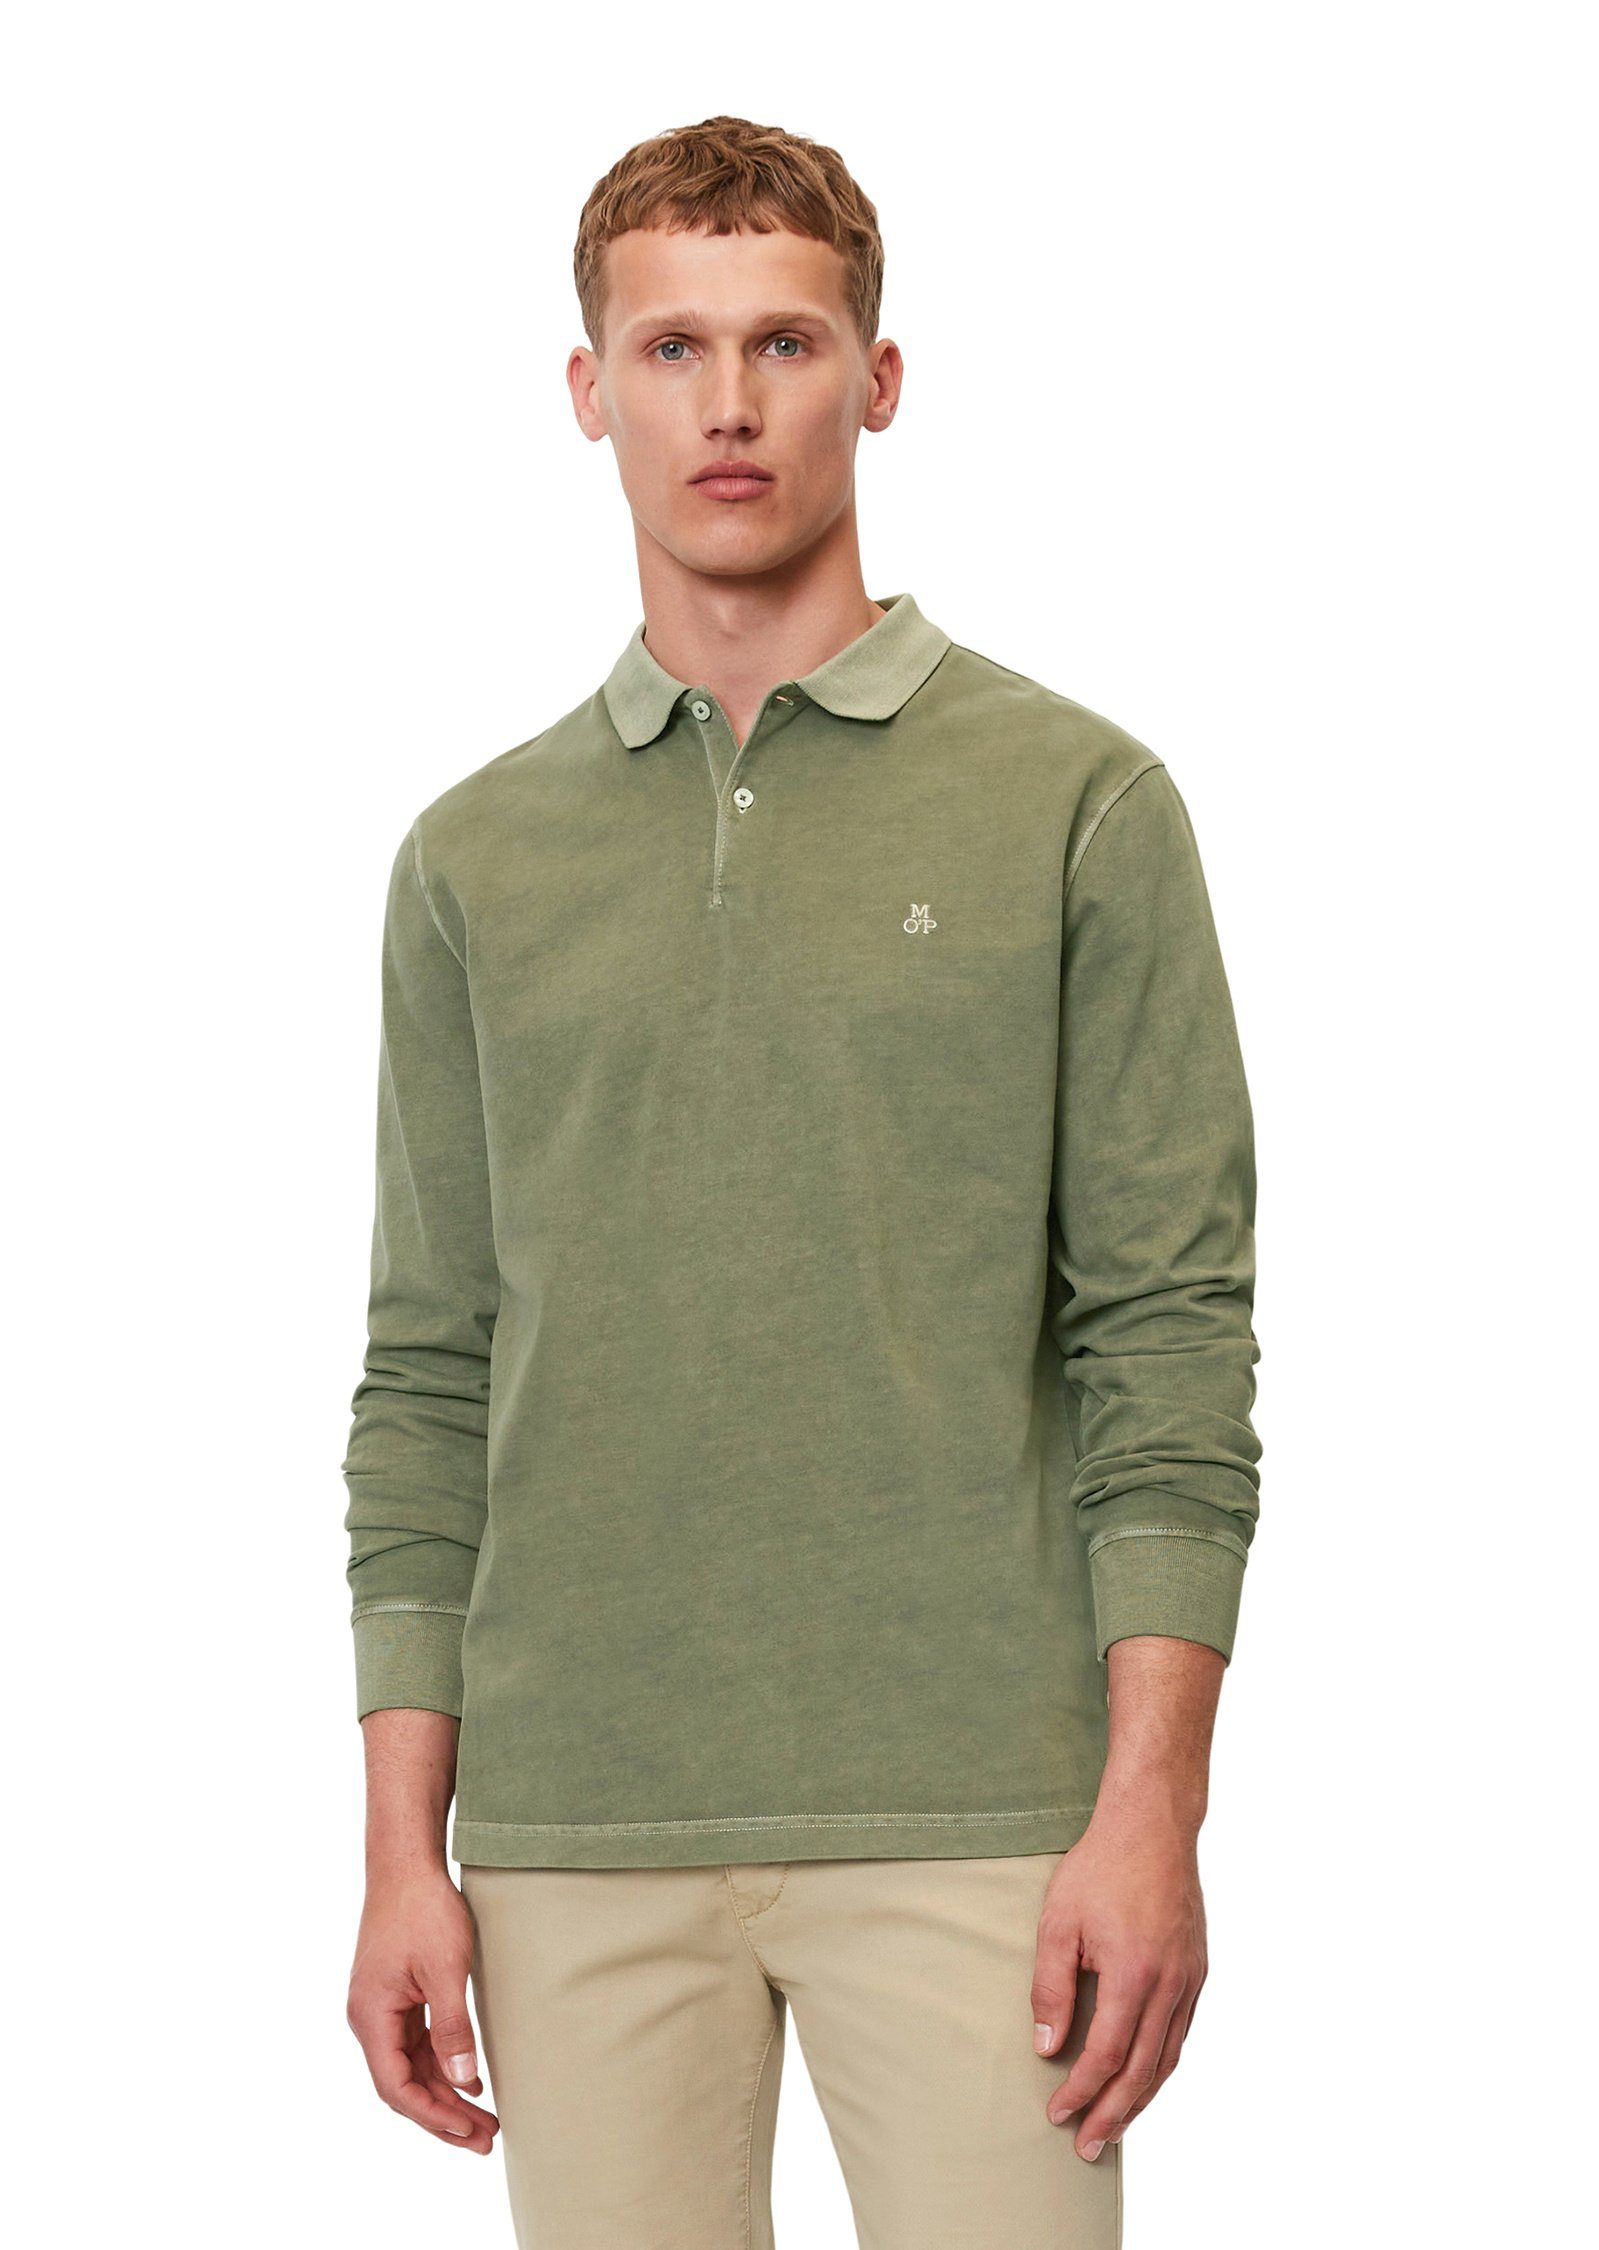 Marc O'Polo Langarm-Poloshirt aus reiner Bio-Baumwolle grün